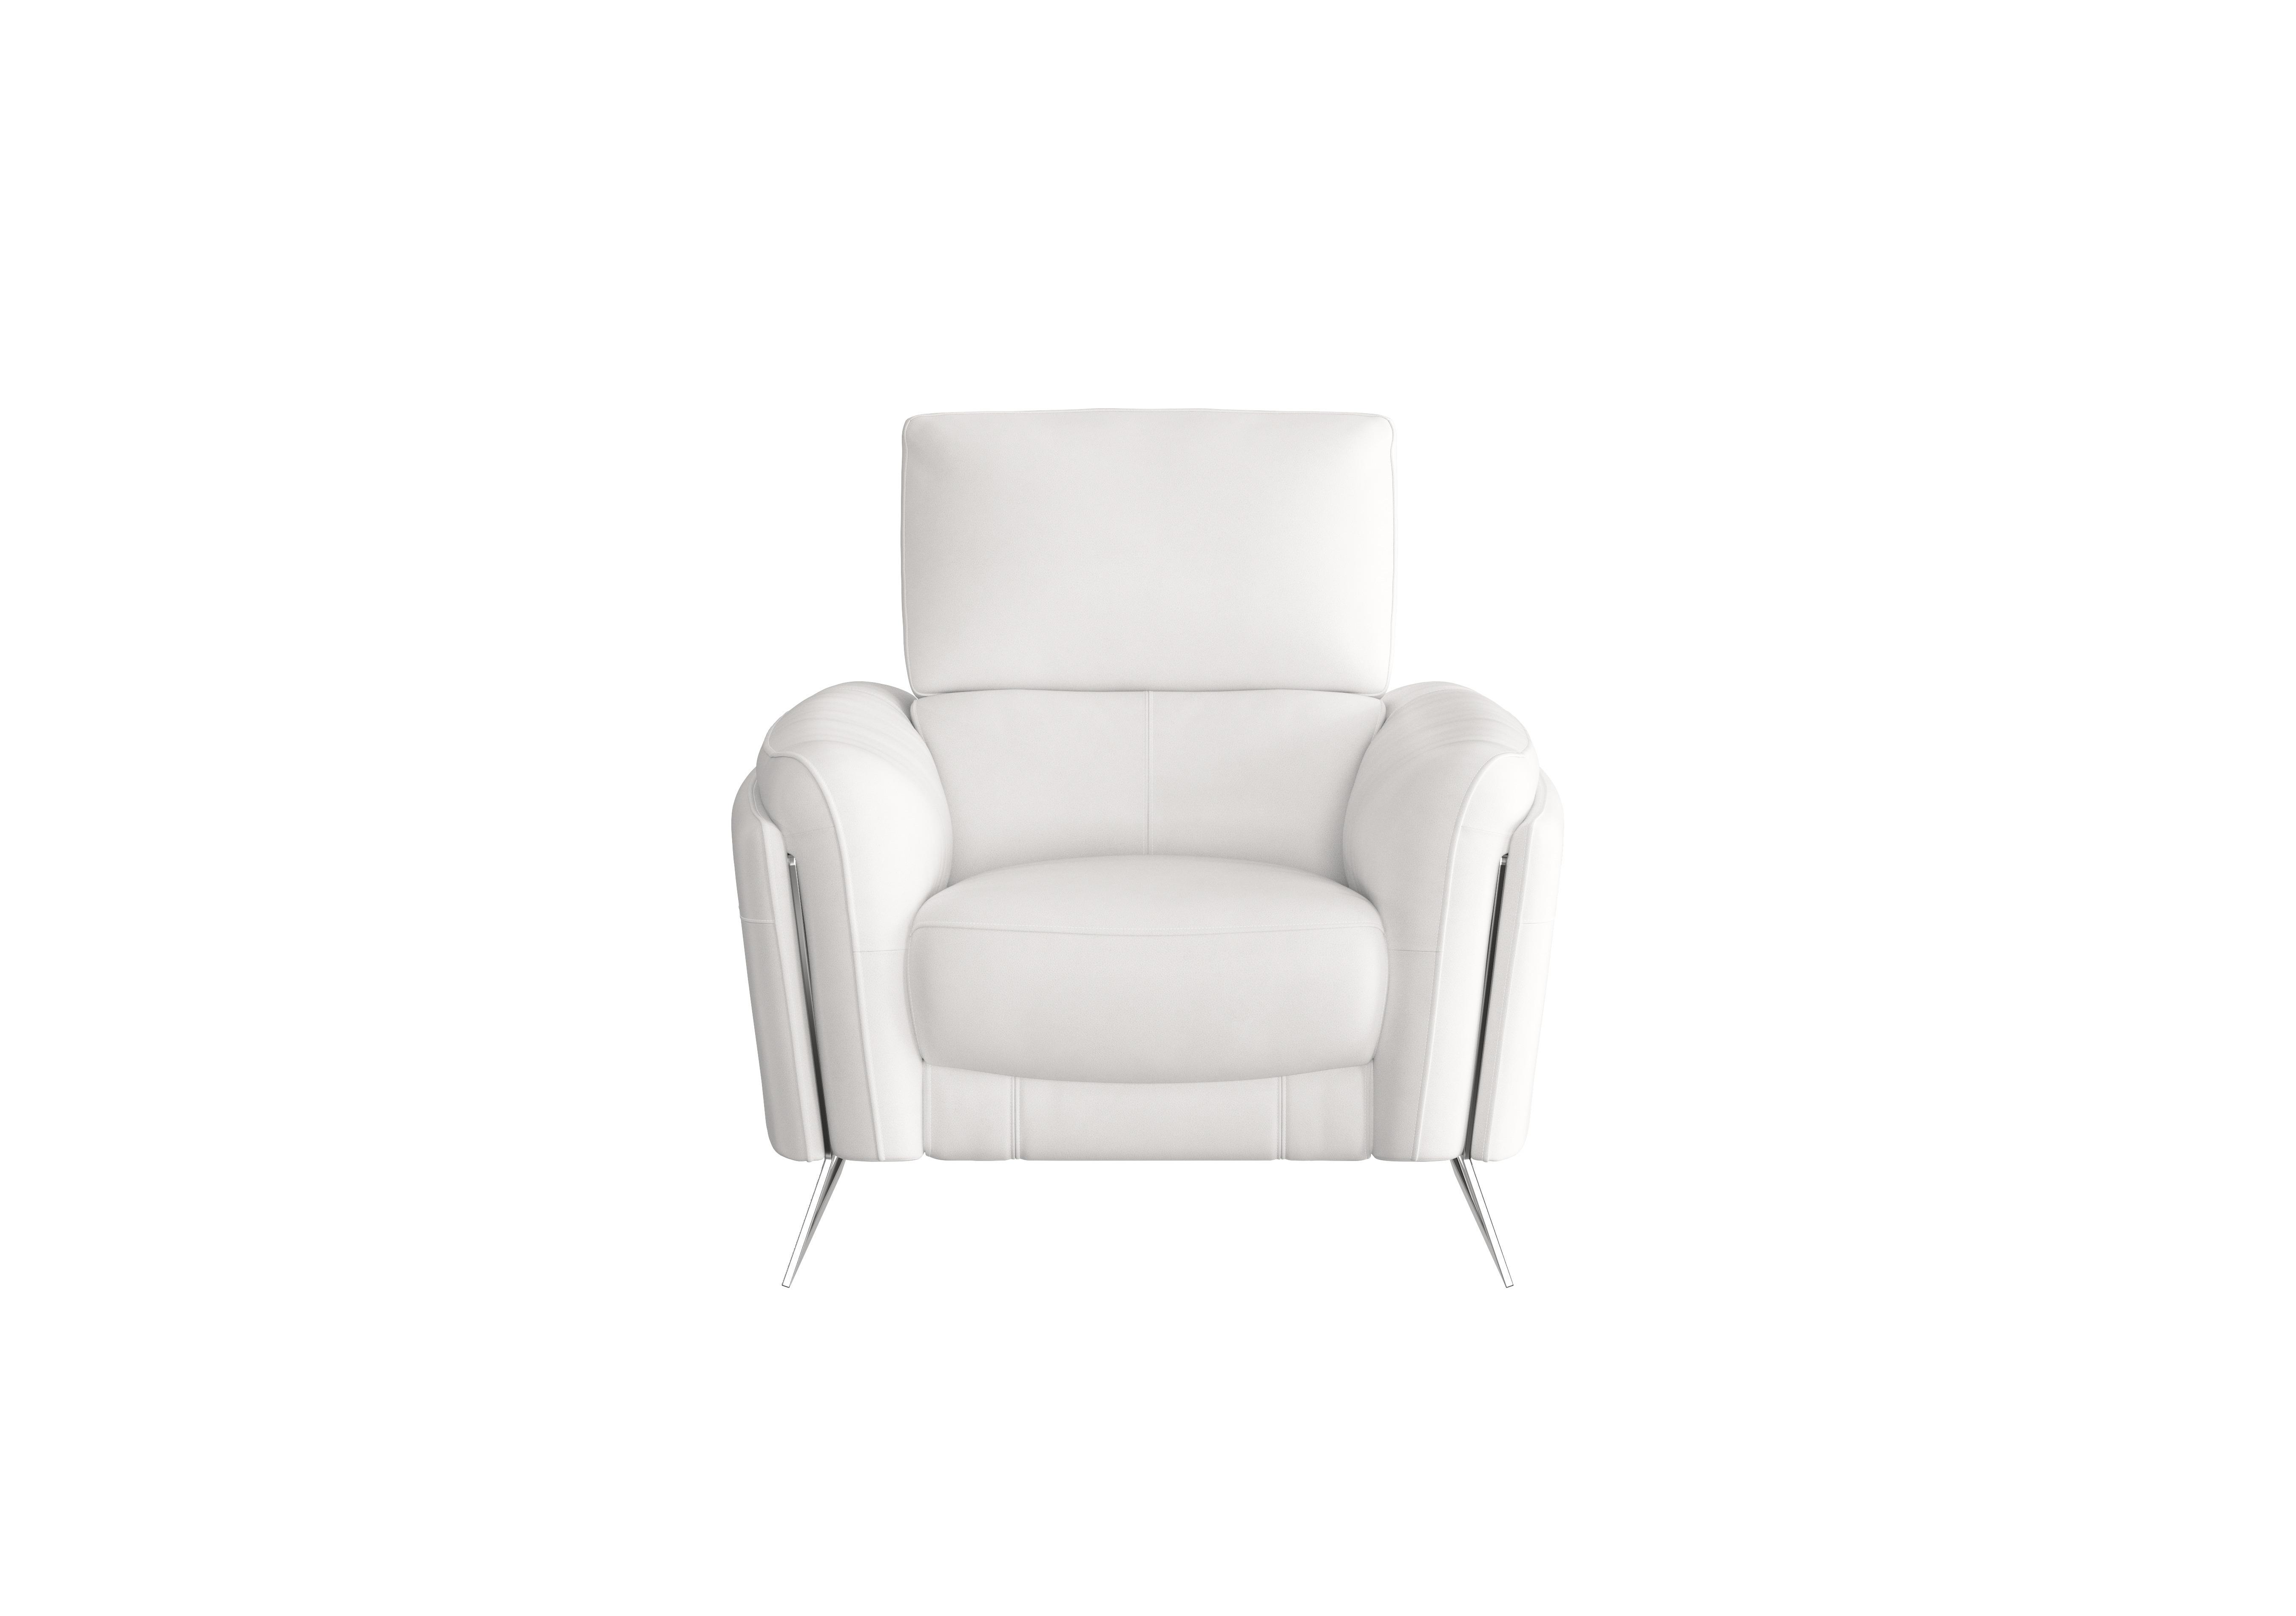 Amarilla Leather Armchair in Bv-744d Star White on Furniture Village